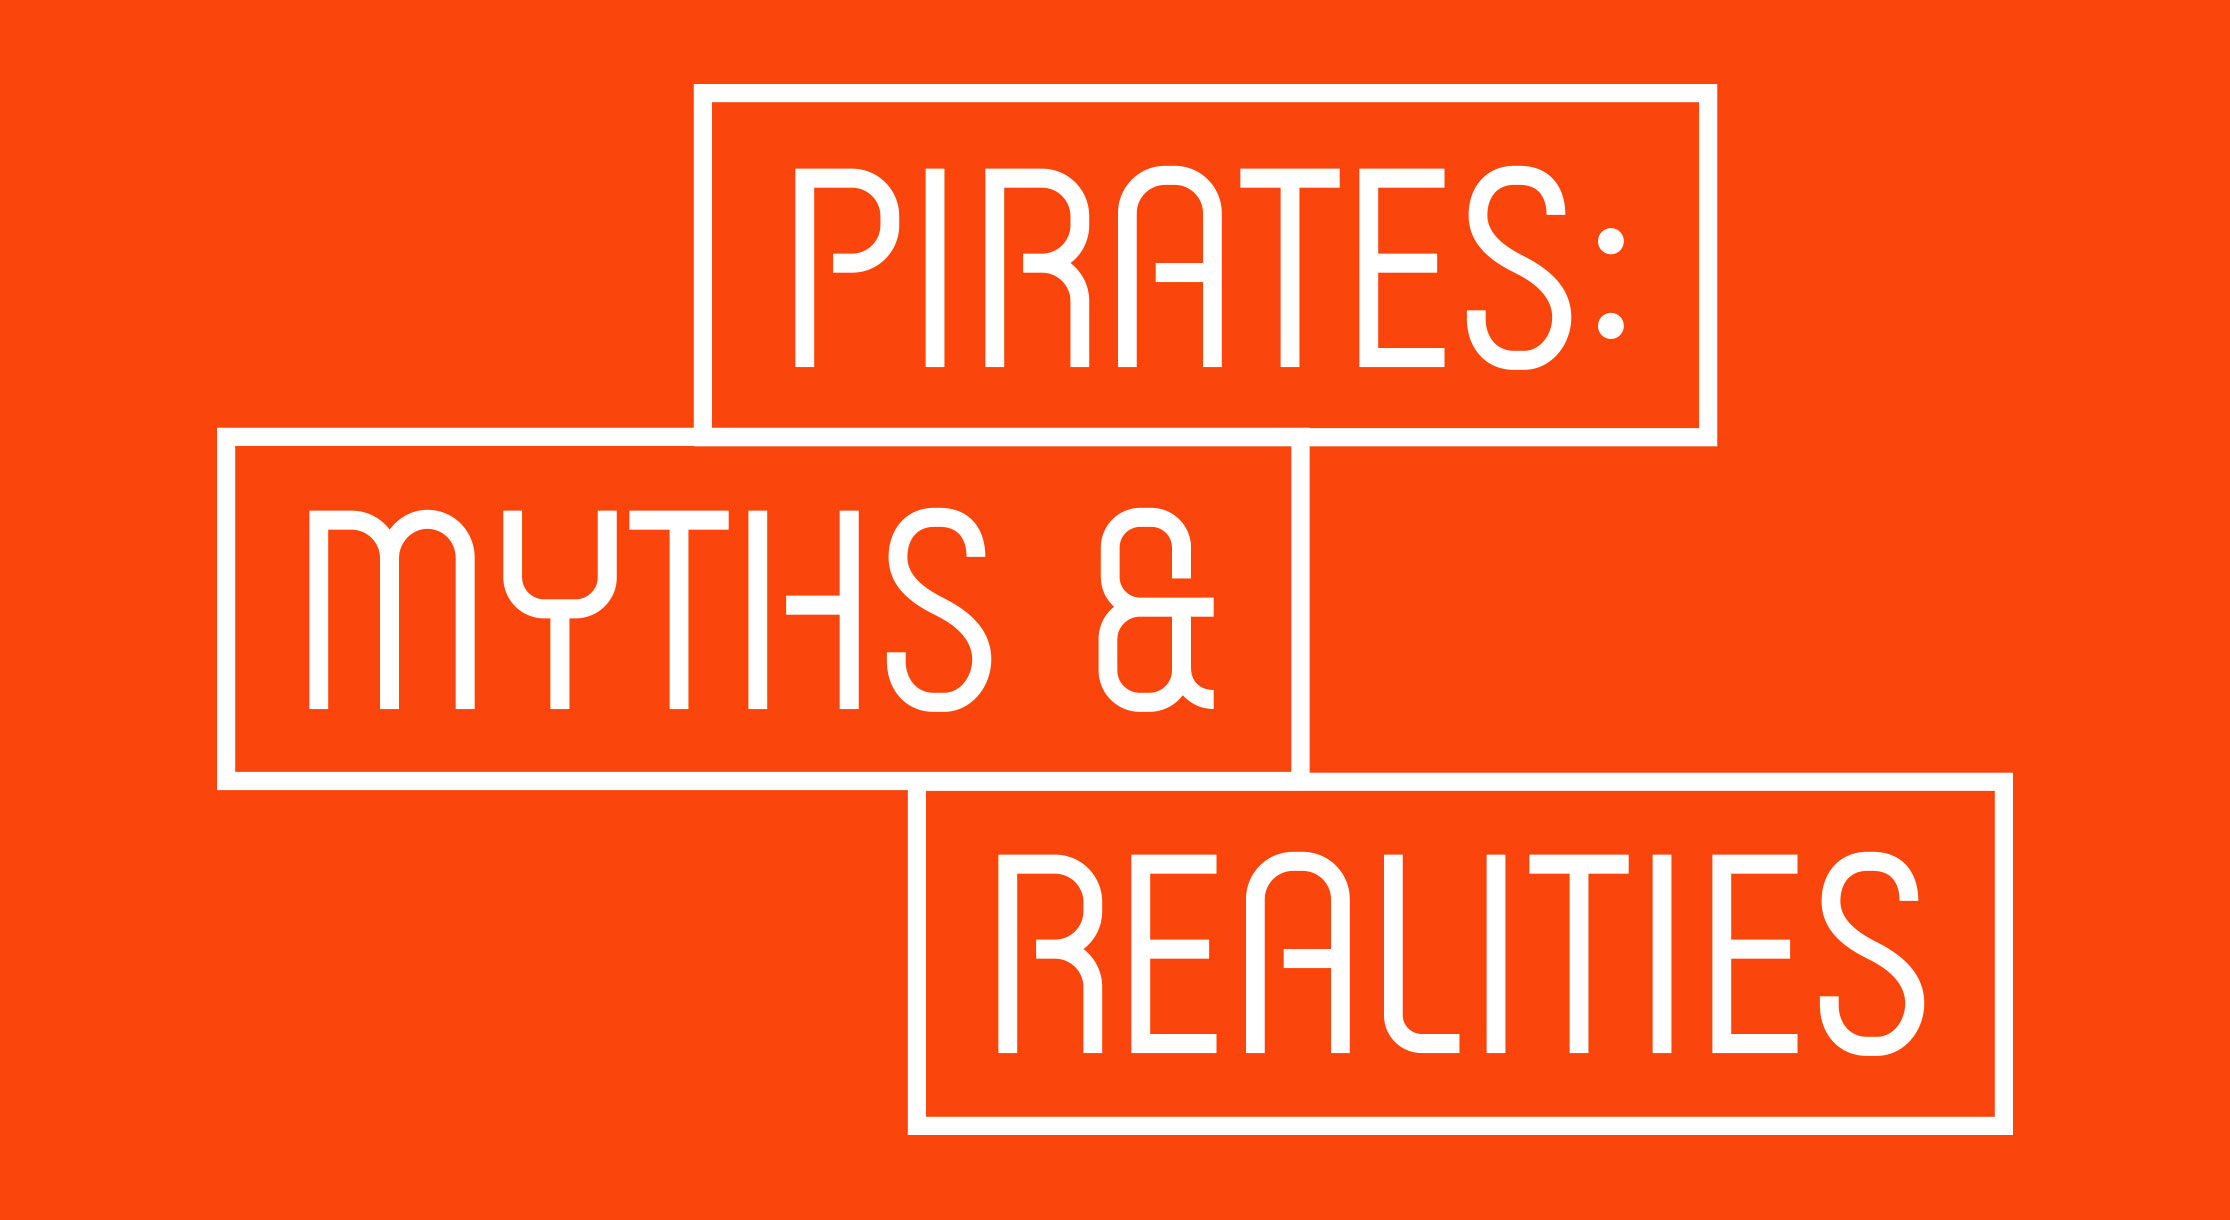 Pirates: Myths & Realities